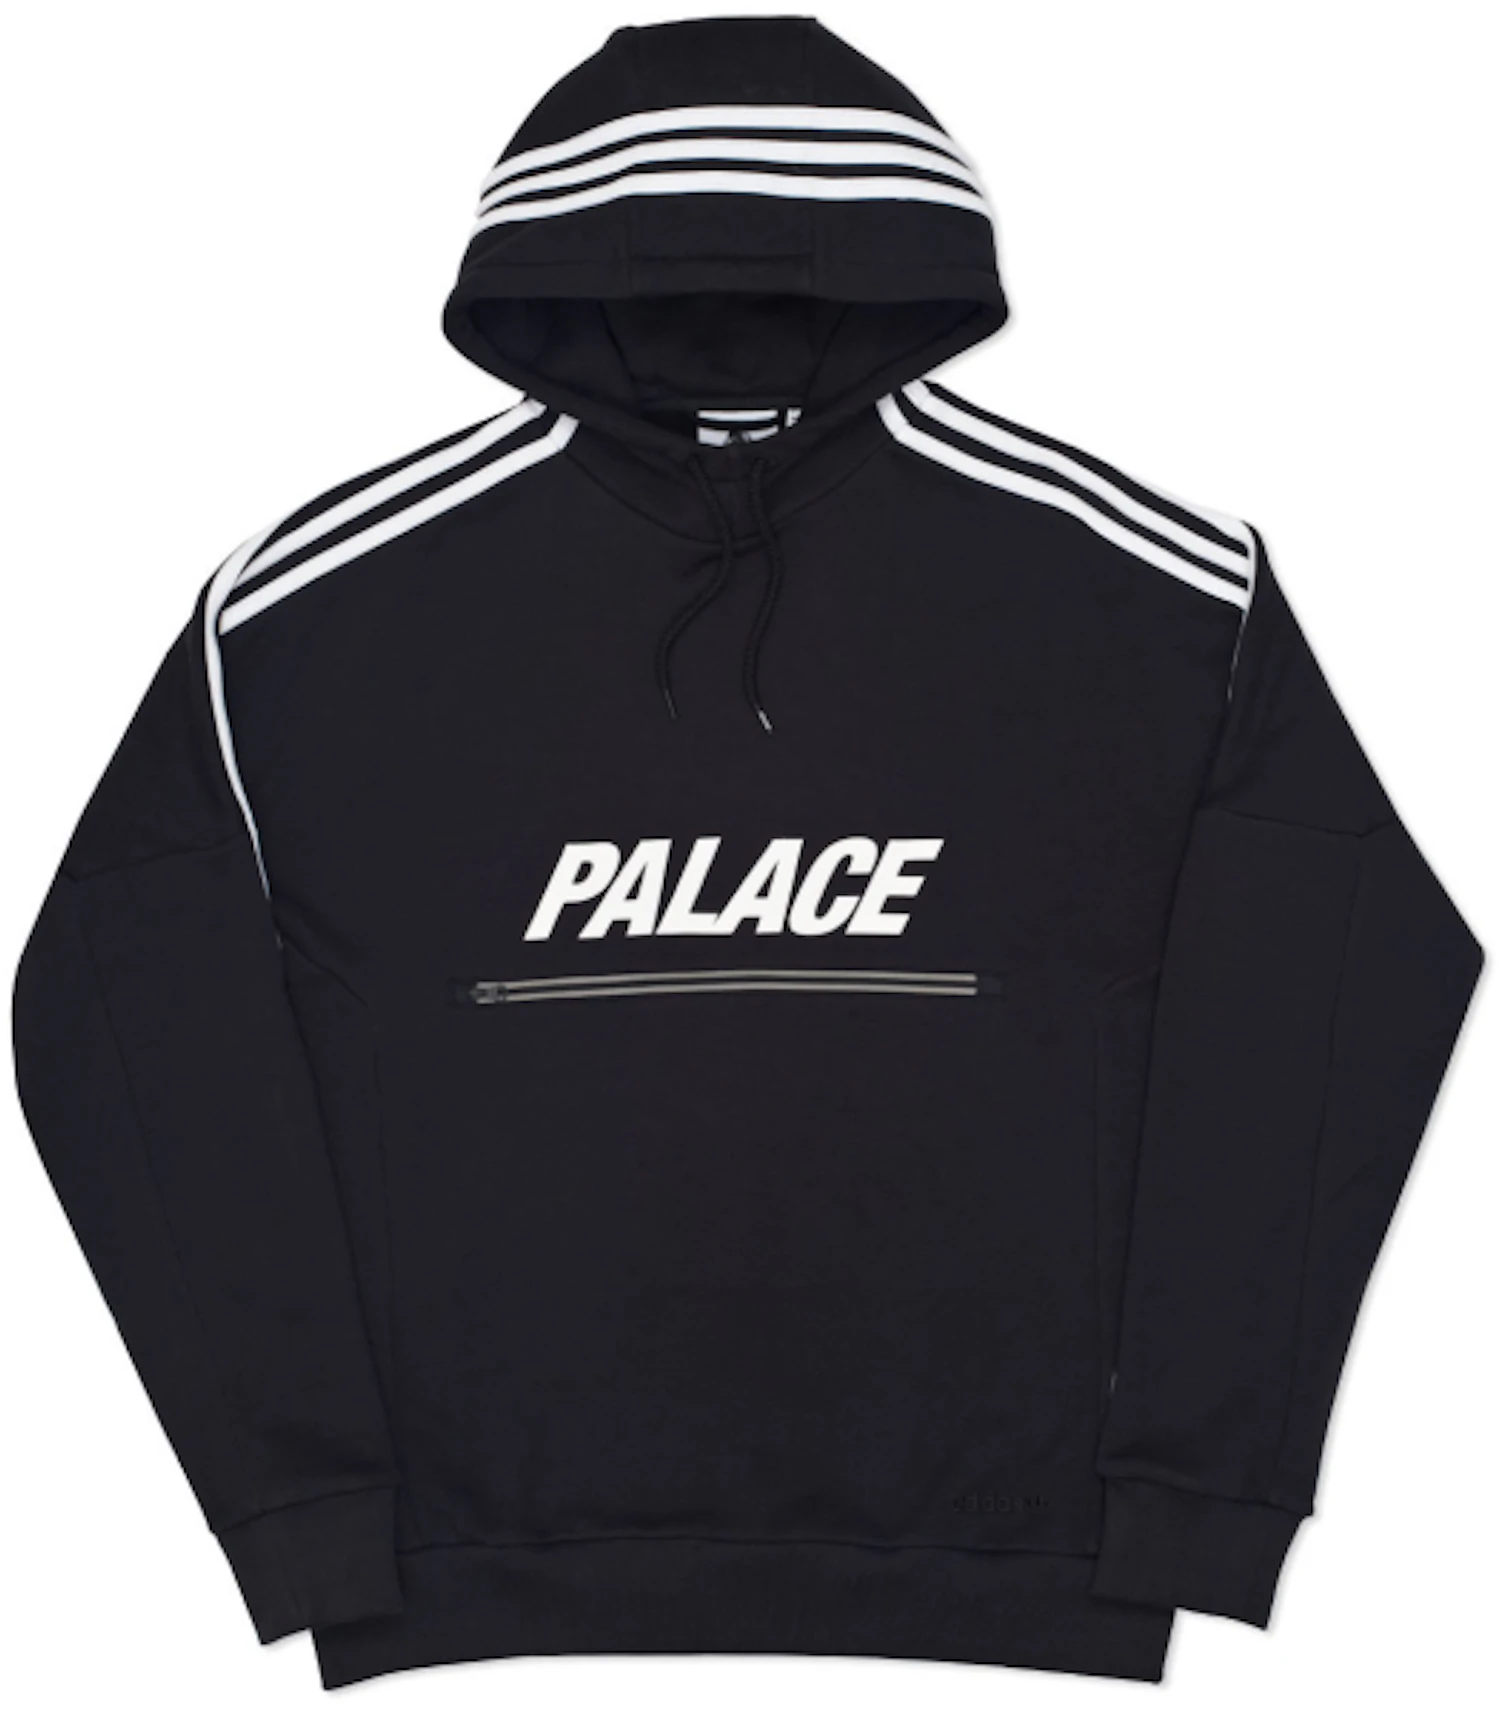 Palace Track Top Black/White - Adidas Summer 2016 ES